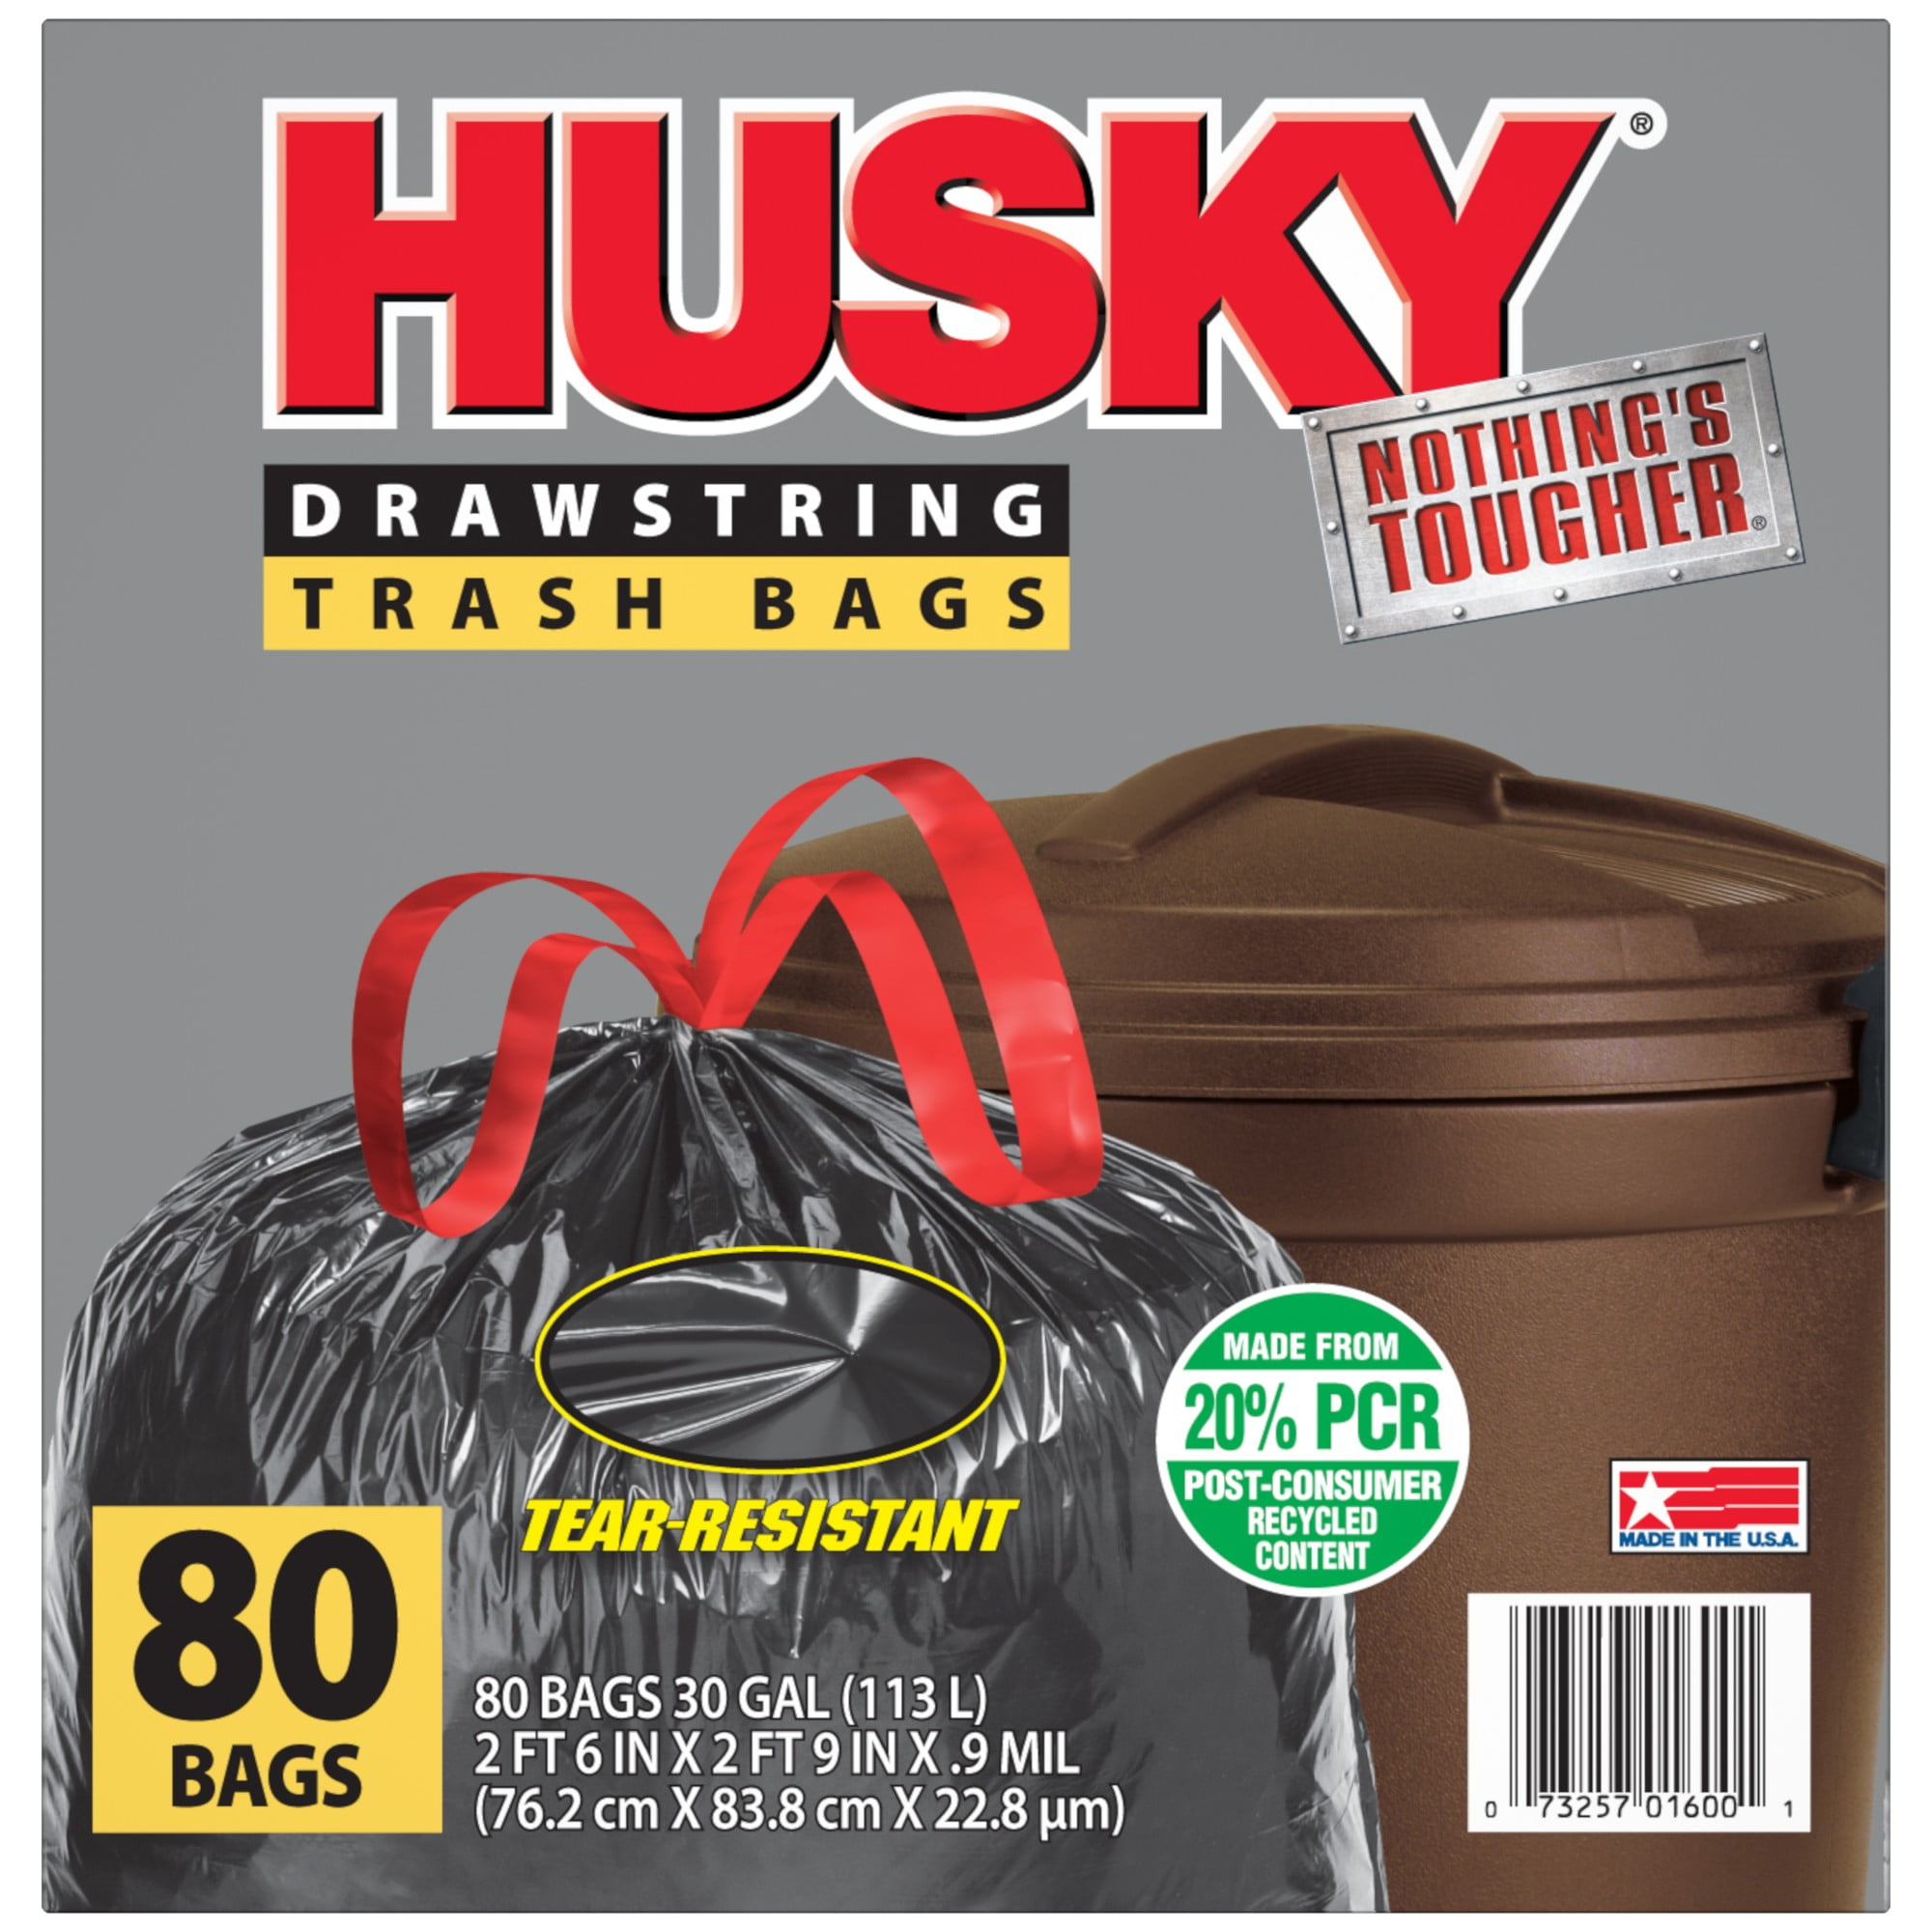 Husky 33 Gallon 0.9 mil Kitchen Drawstring Trash Bags, 42 Count, Black